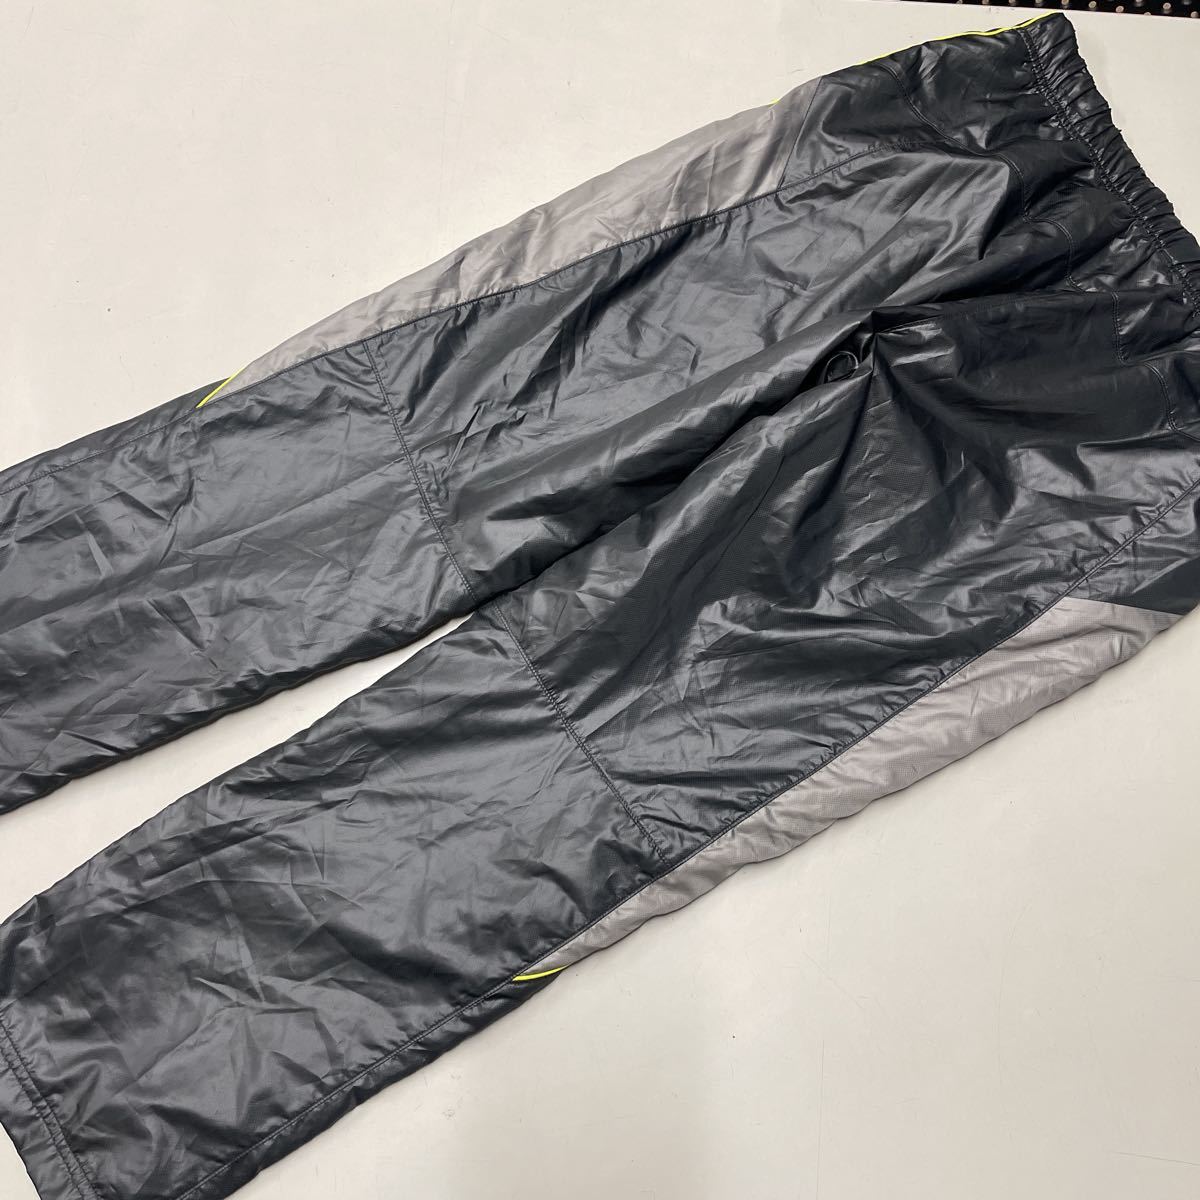  Champion champion ветровка брюки CJ1593 черный lime низ не использовался Thermo to long водоотталкивающий теплоизоляция M размер мужской 